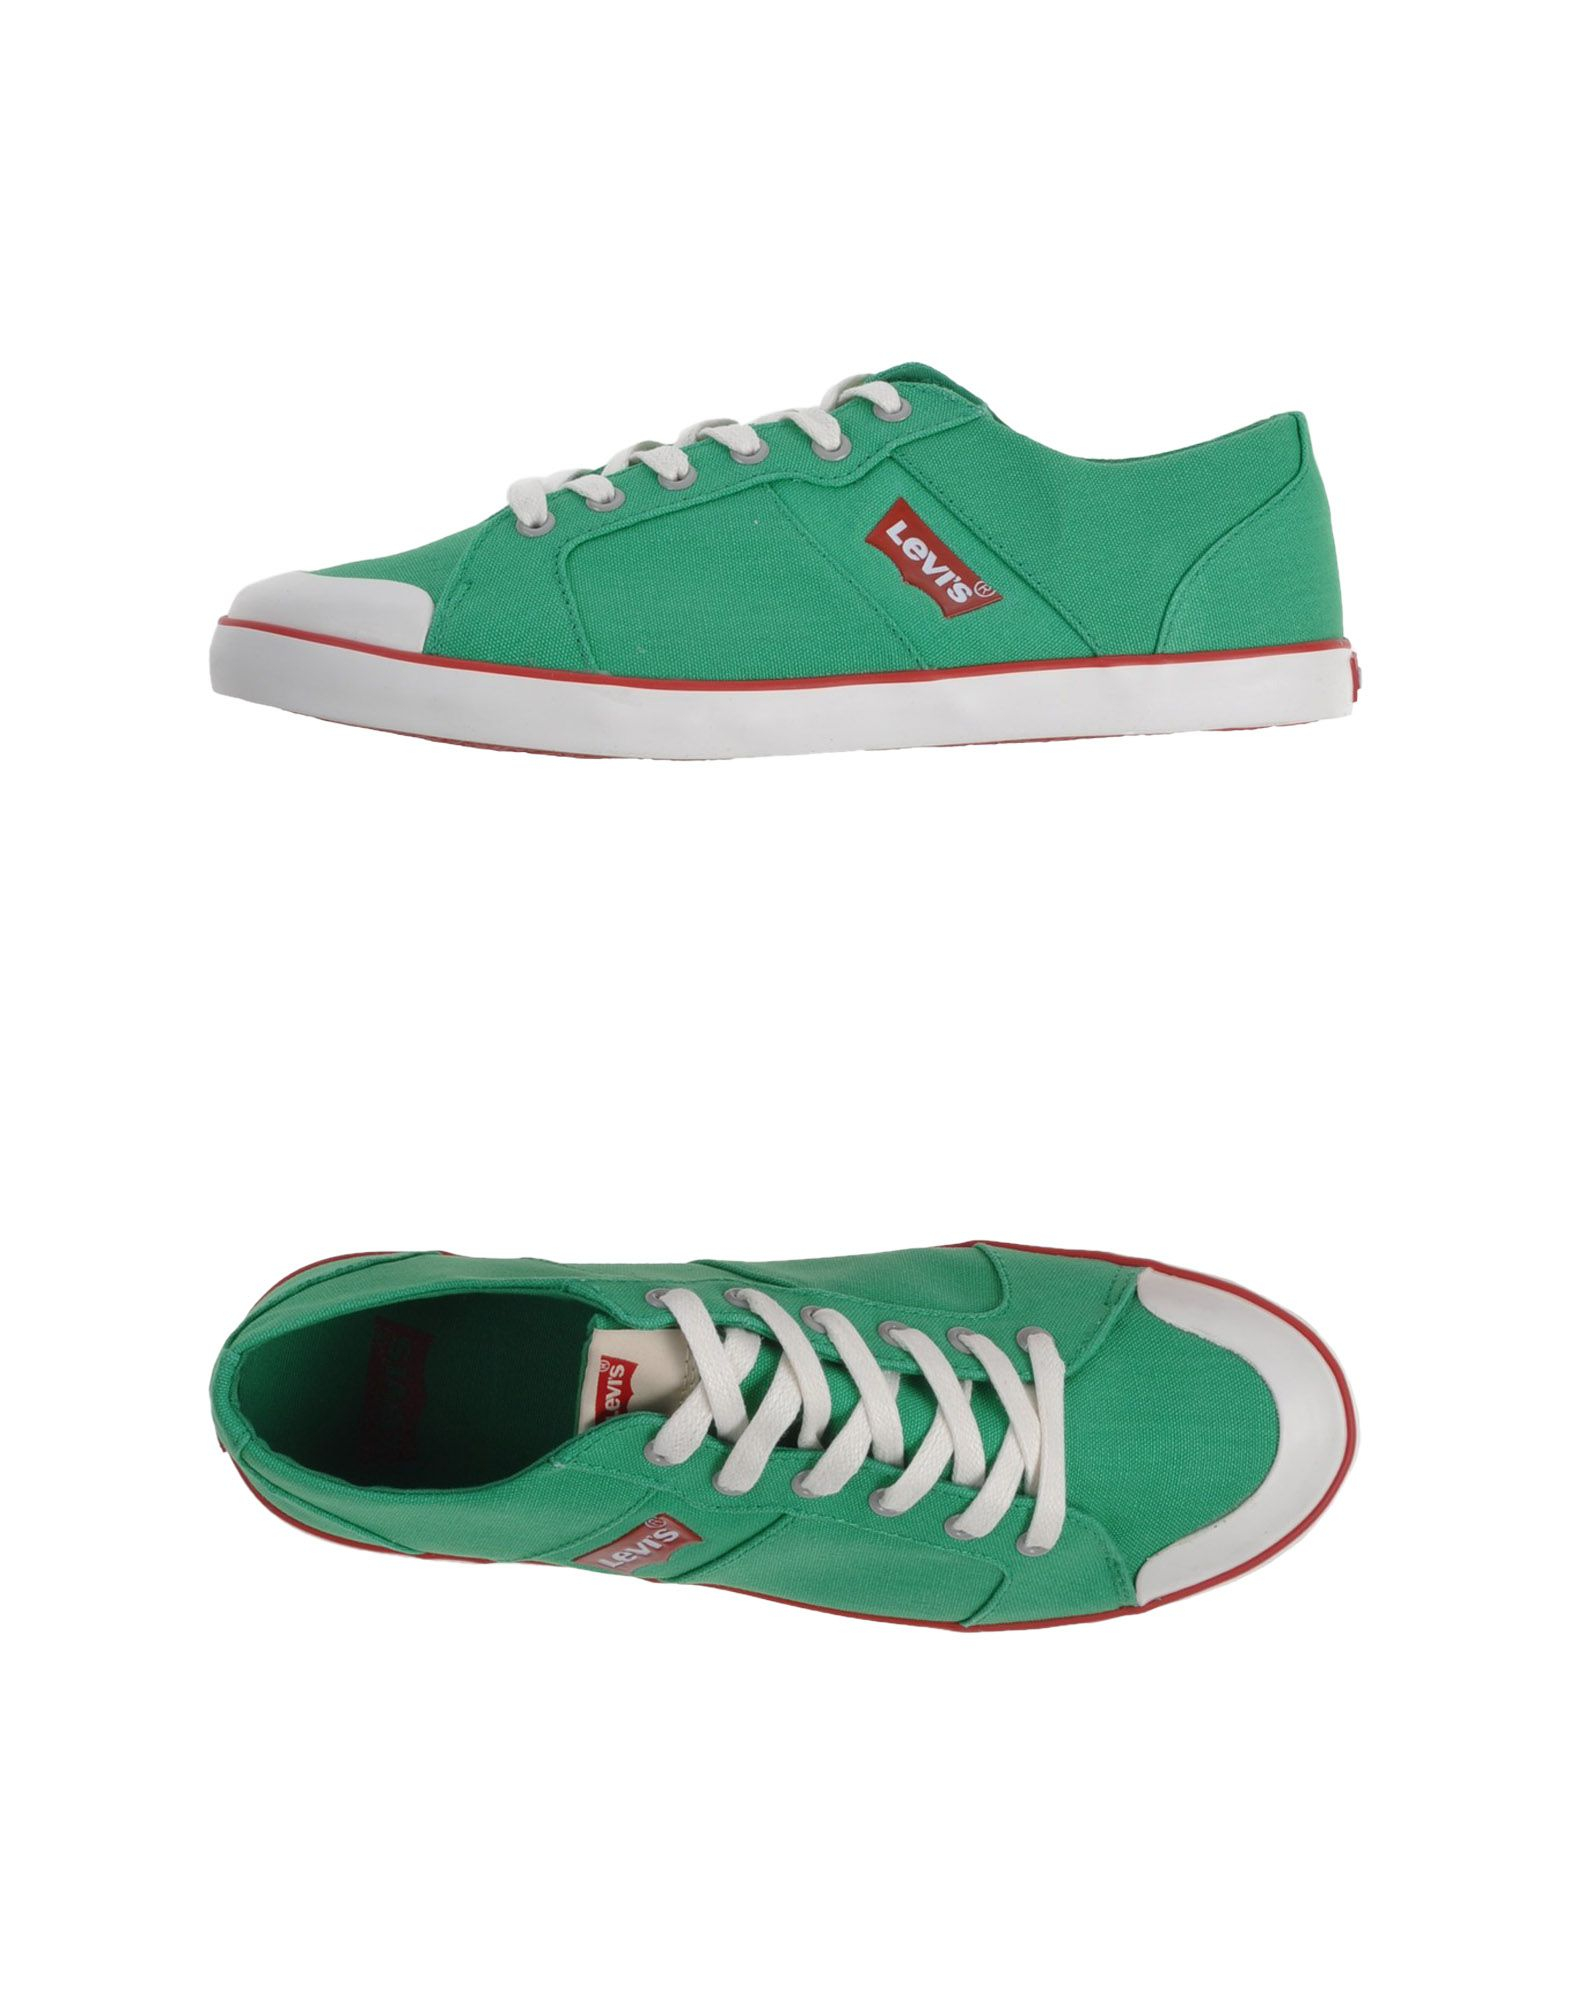 Lyst - Levi'S Low-tops & Sneakers in Green for Men